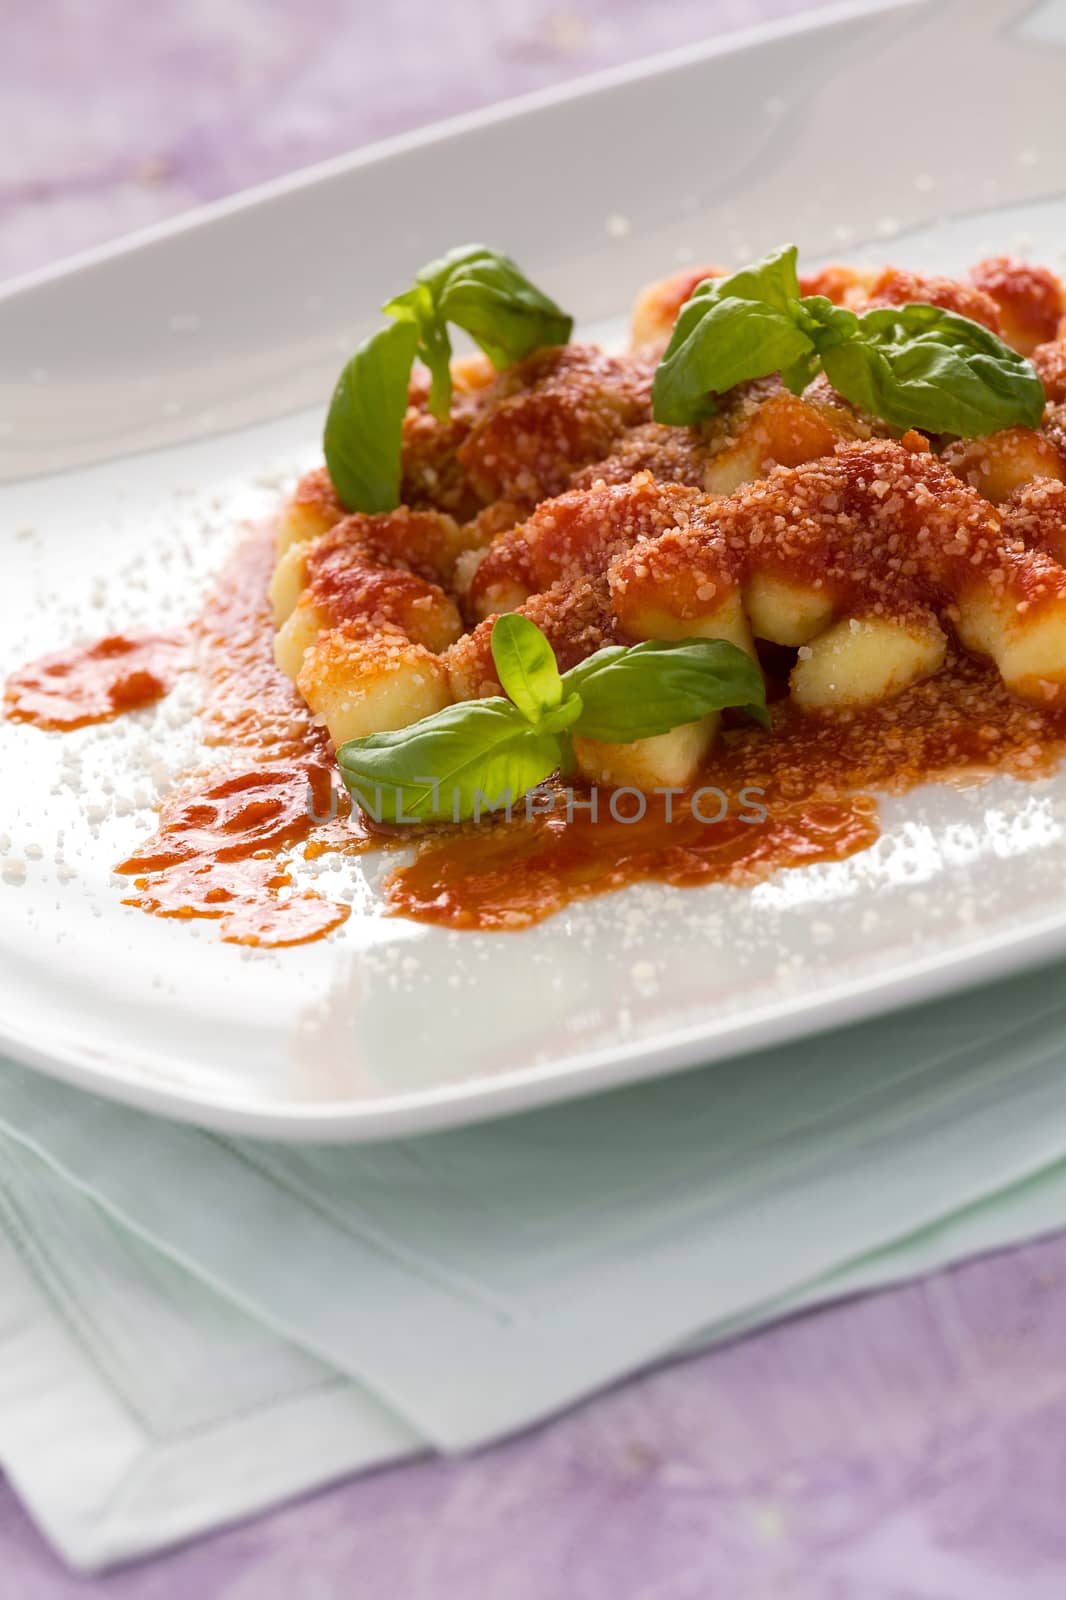 Gnocchi, Italian pasta with tomato sauce basil and grana cheese by LuigiMorbidelli